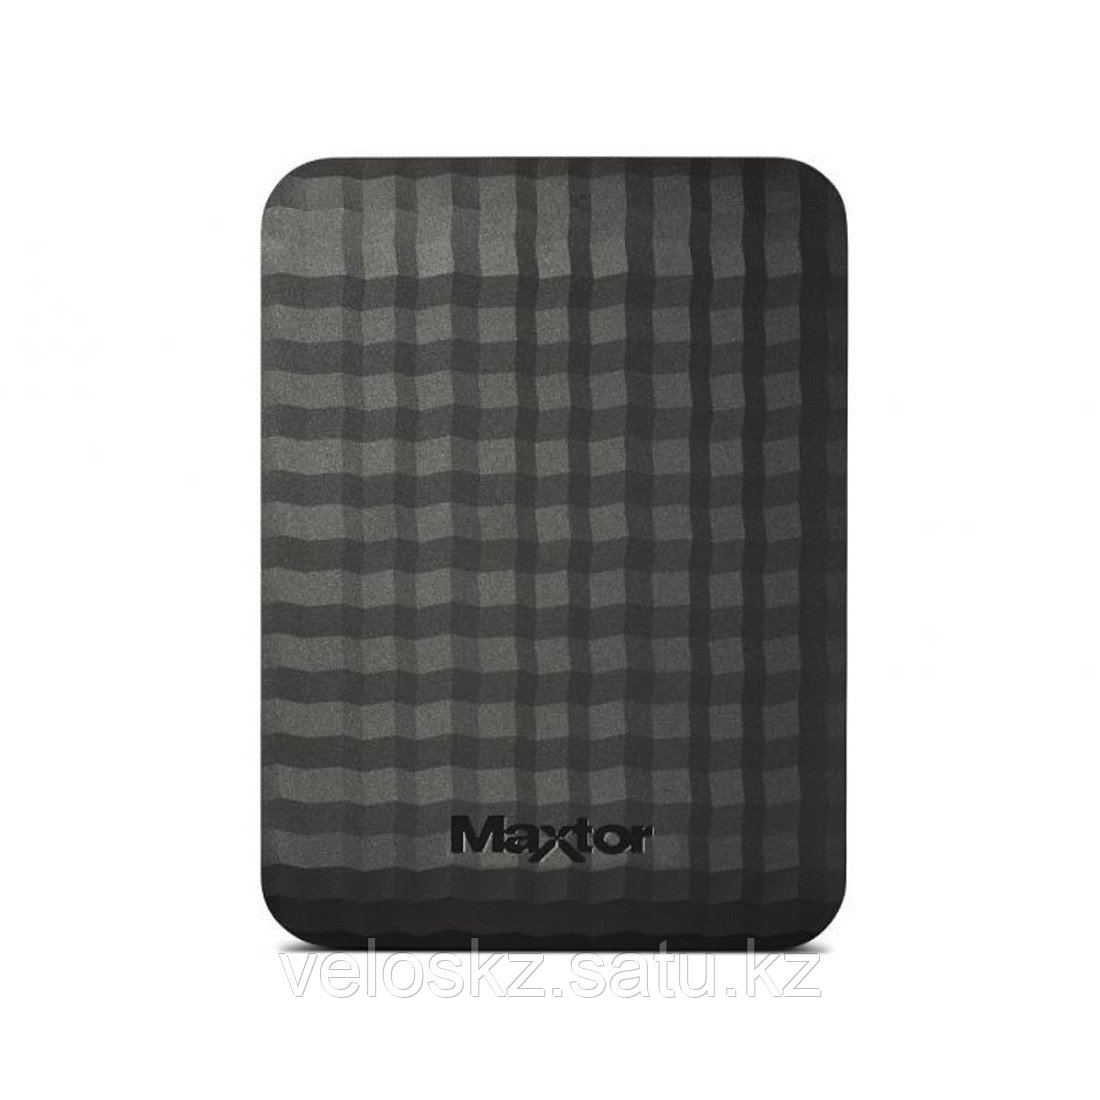 Внешний жёсткий диск Seagate (Maxtor) 500GB 2.5" STSHX-M500TCBM USB 3.0